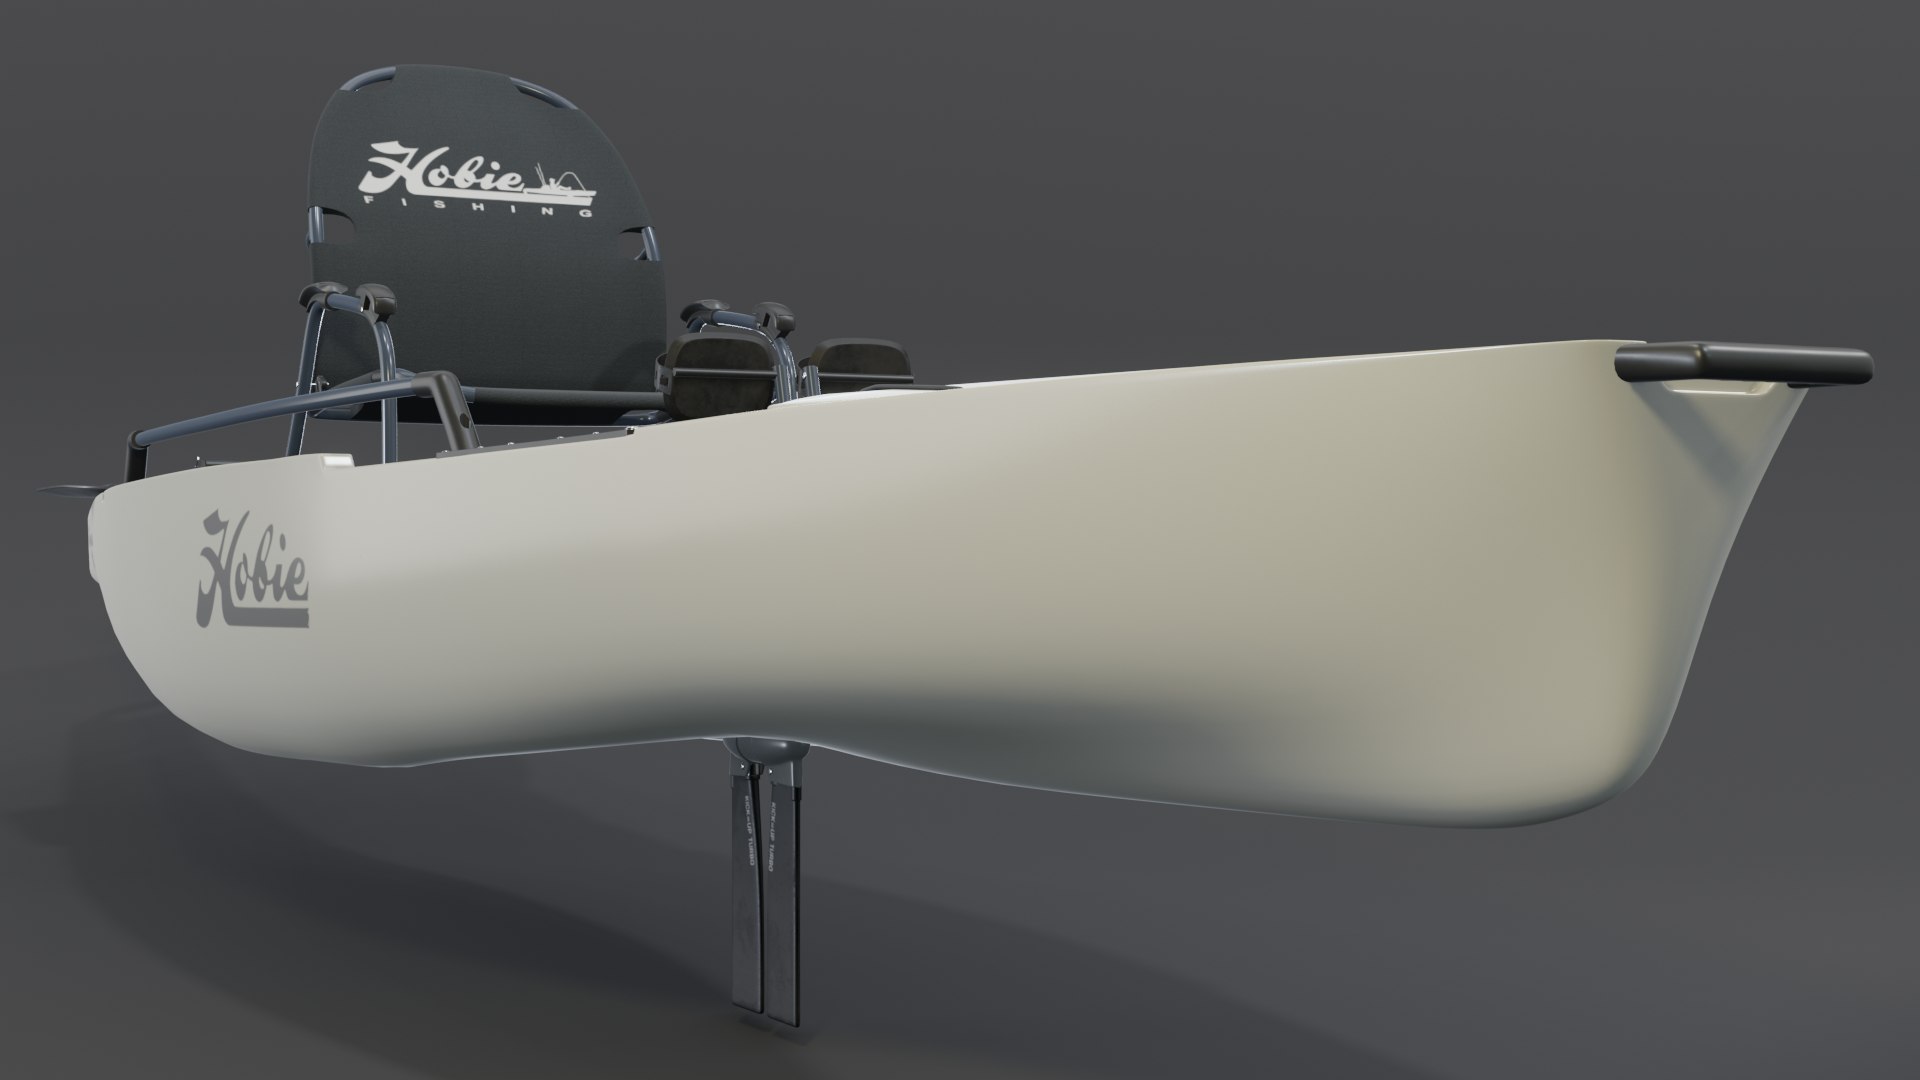 2022 Hobie Mirage Pro Angler 14 Fishing Kayak Ivory Dune